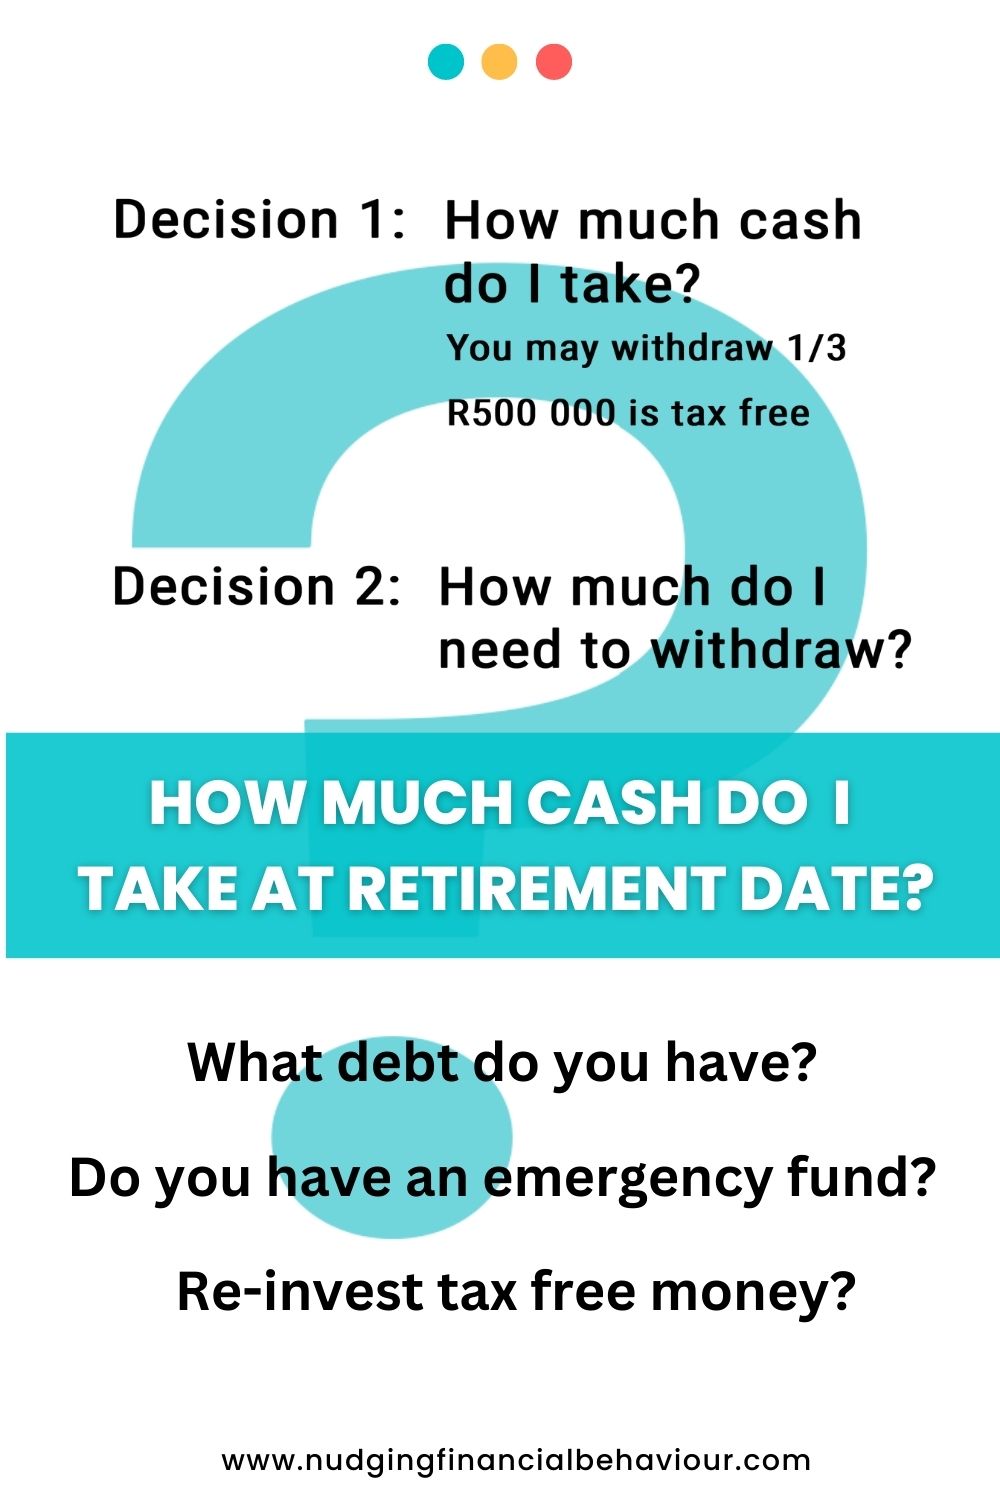 Questions at retirement